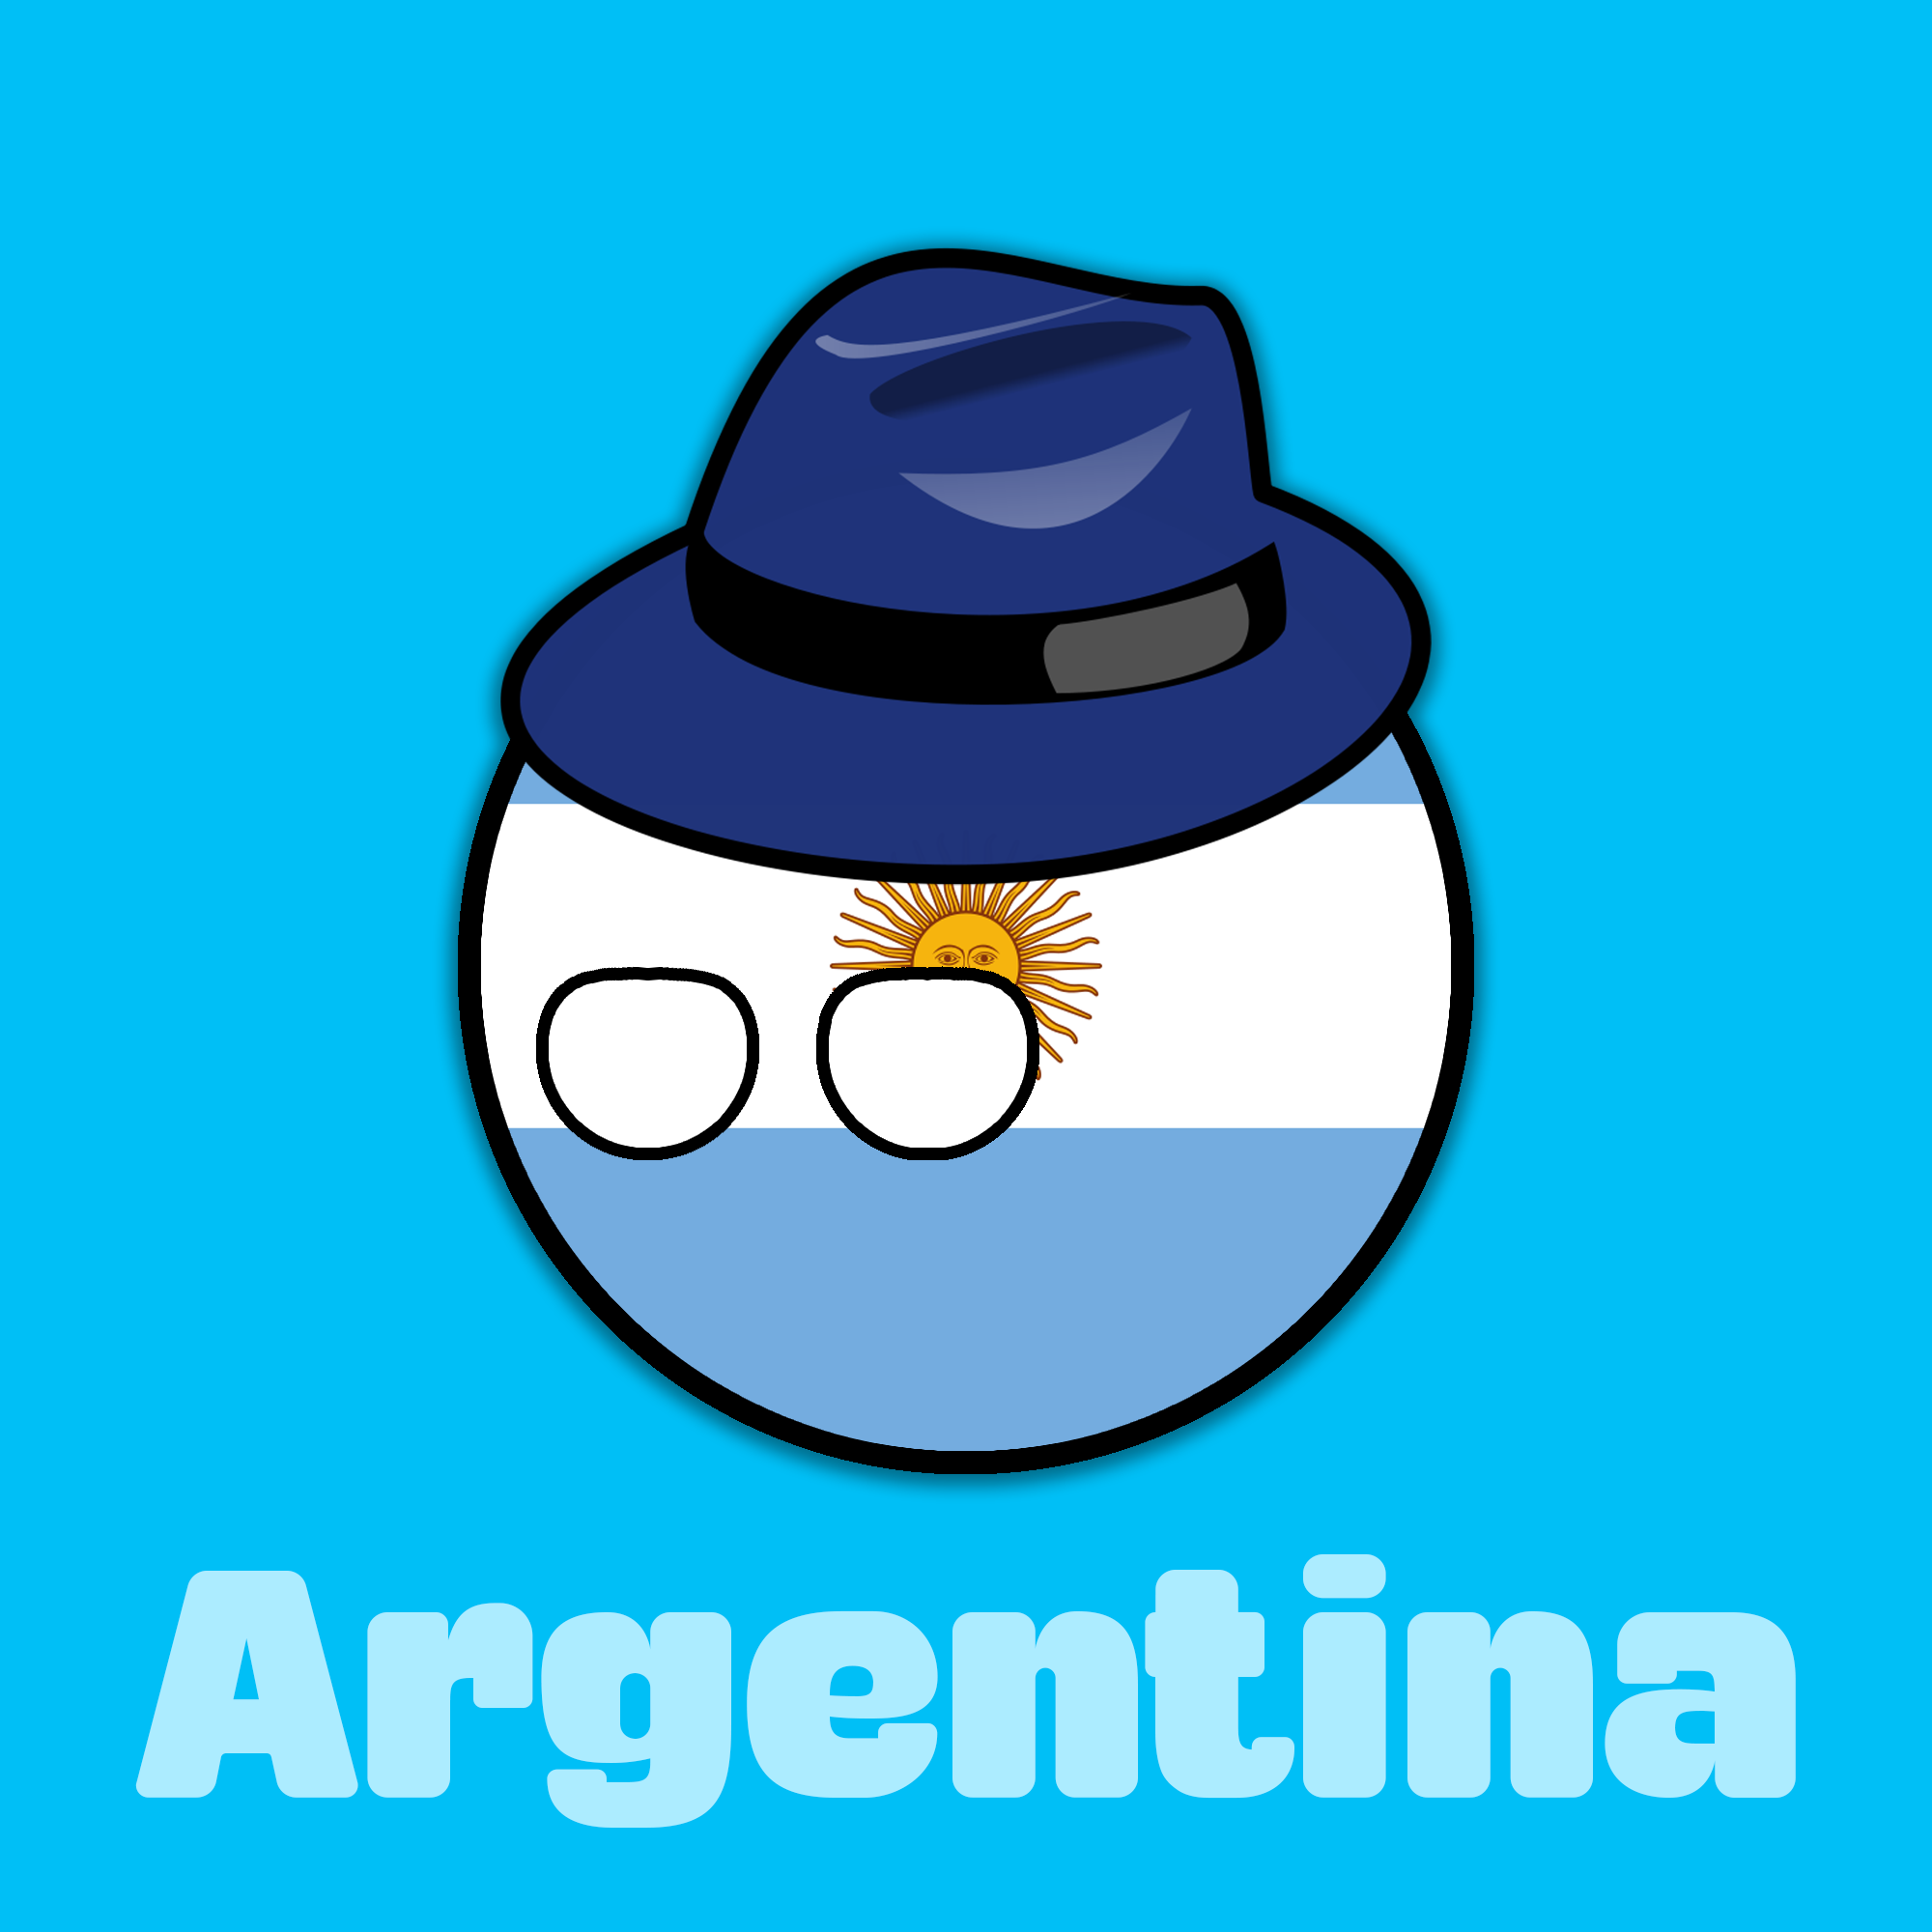 countryhumans argentina